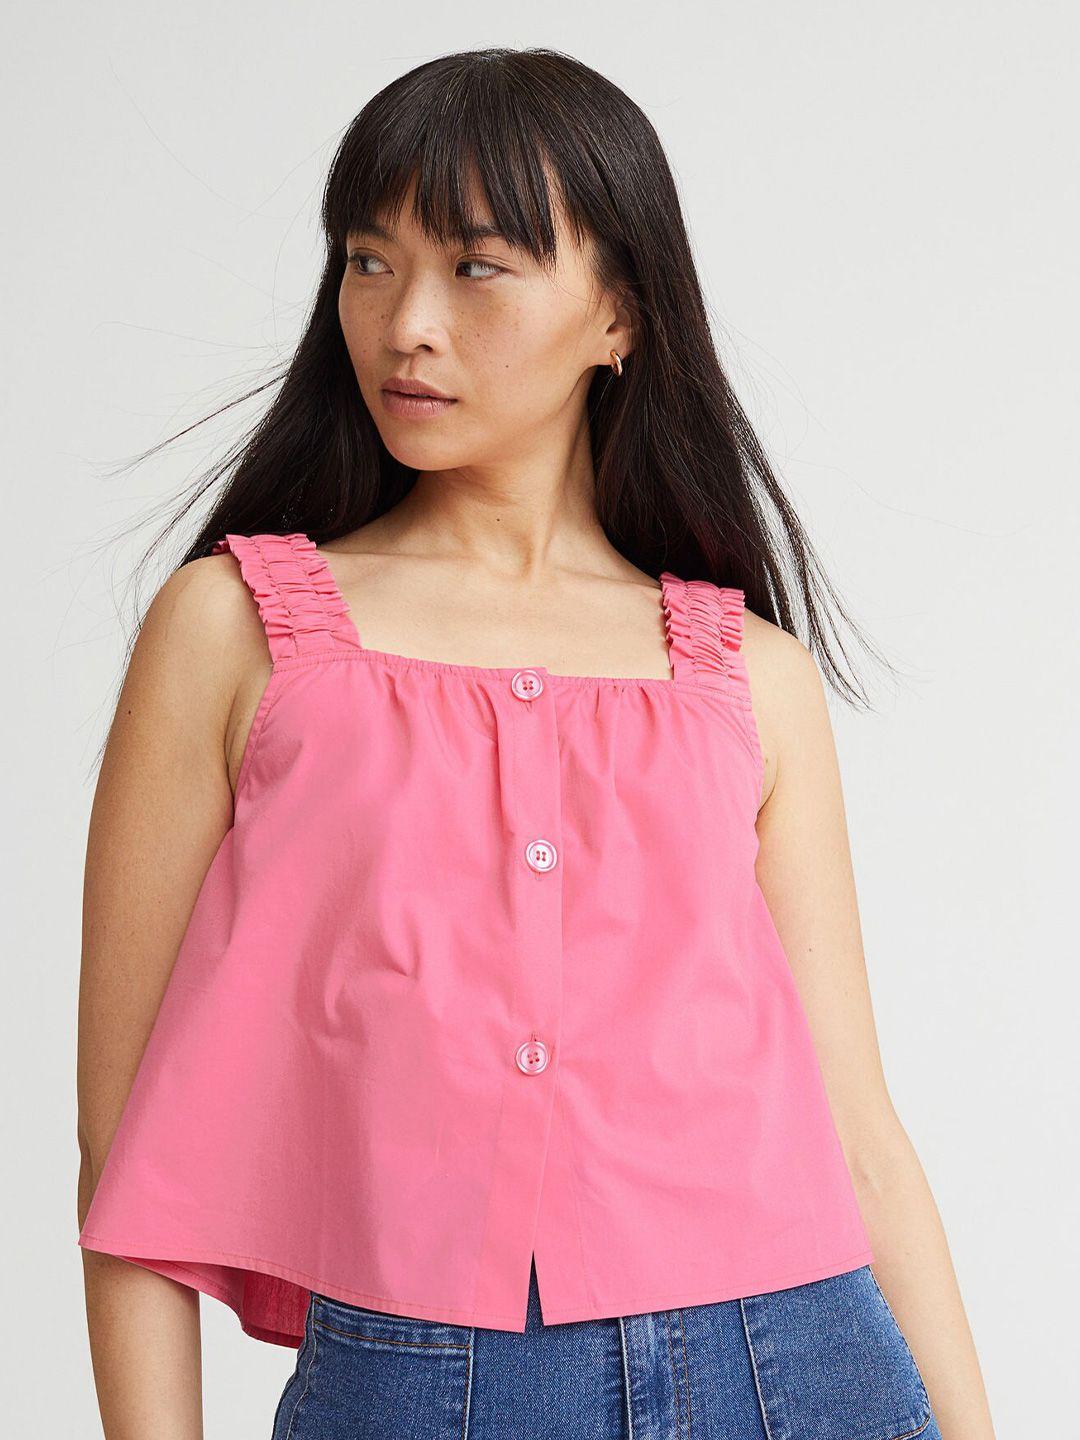 h&m women pink cotton top